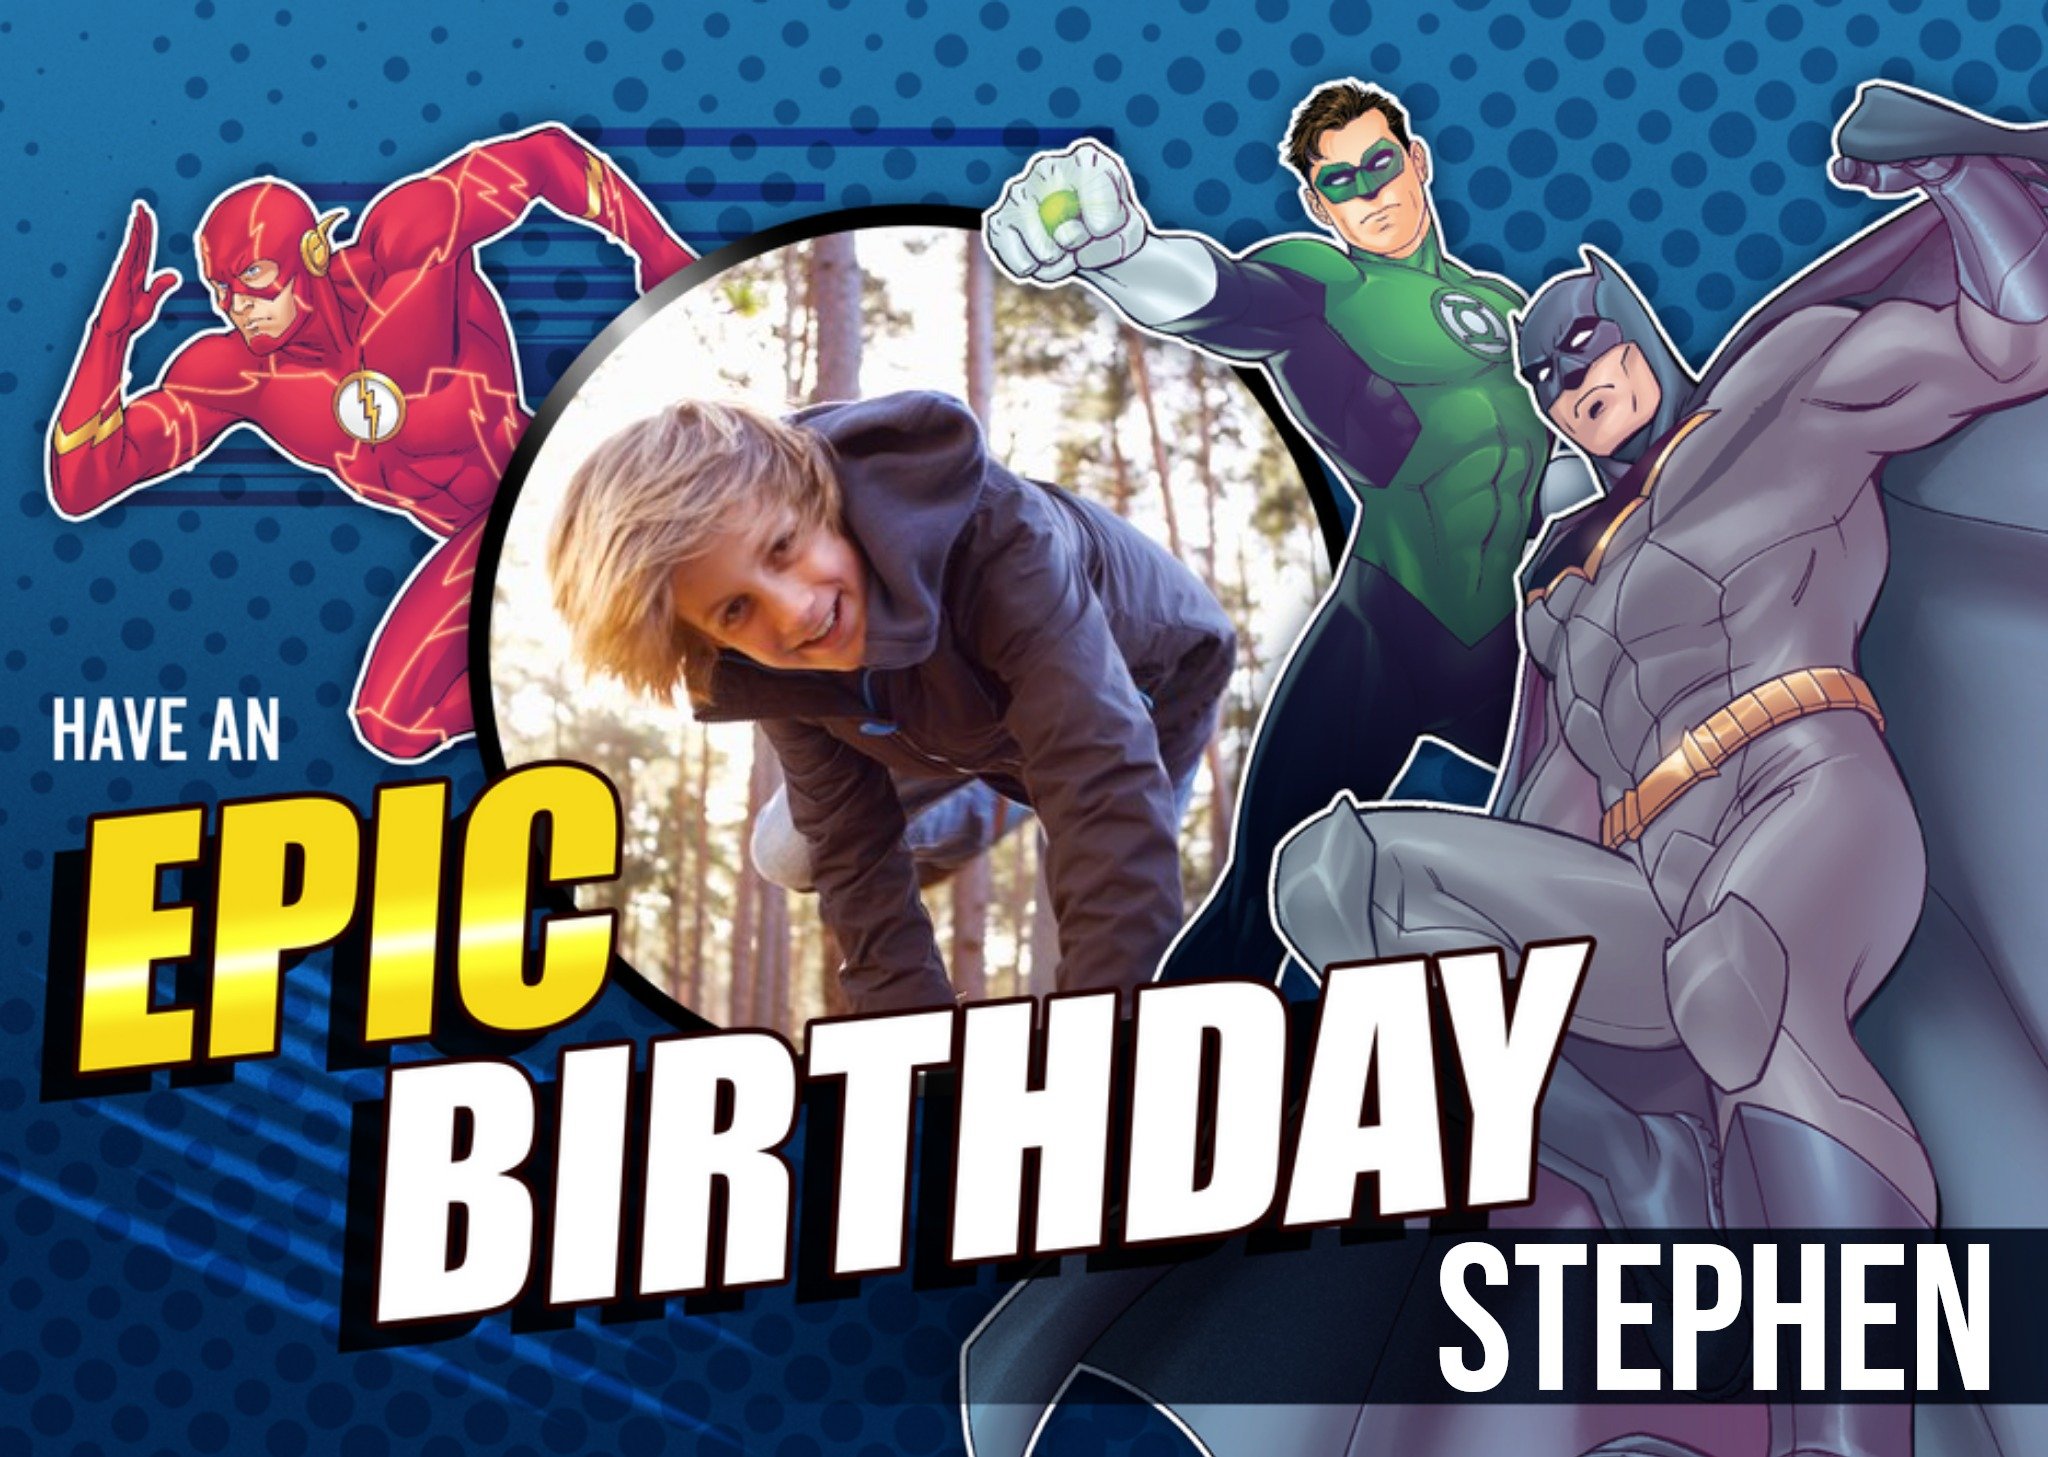 Batman Justice League Photo Upload Epic Birthday Card, Large